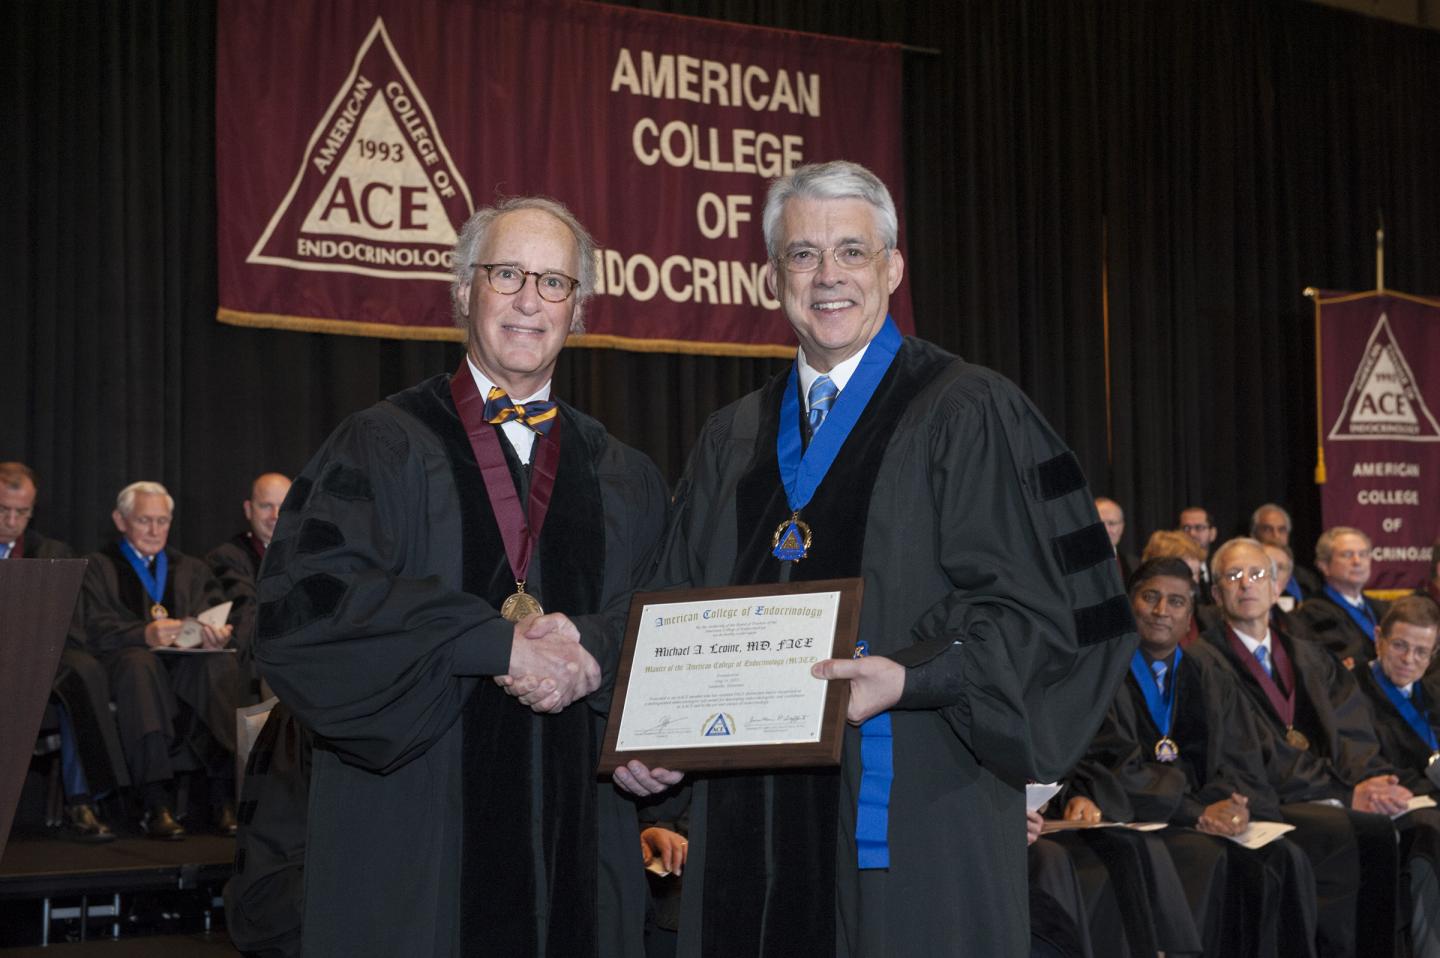 Dr. Levine Receives MACE Award